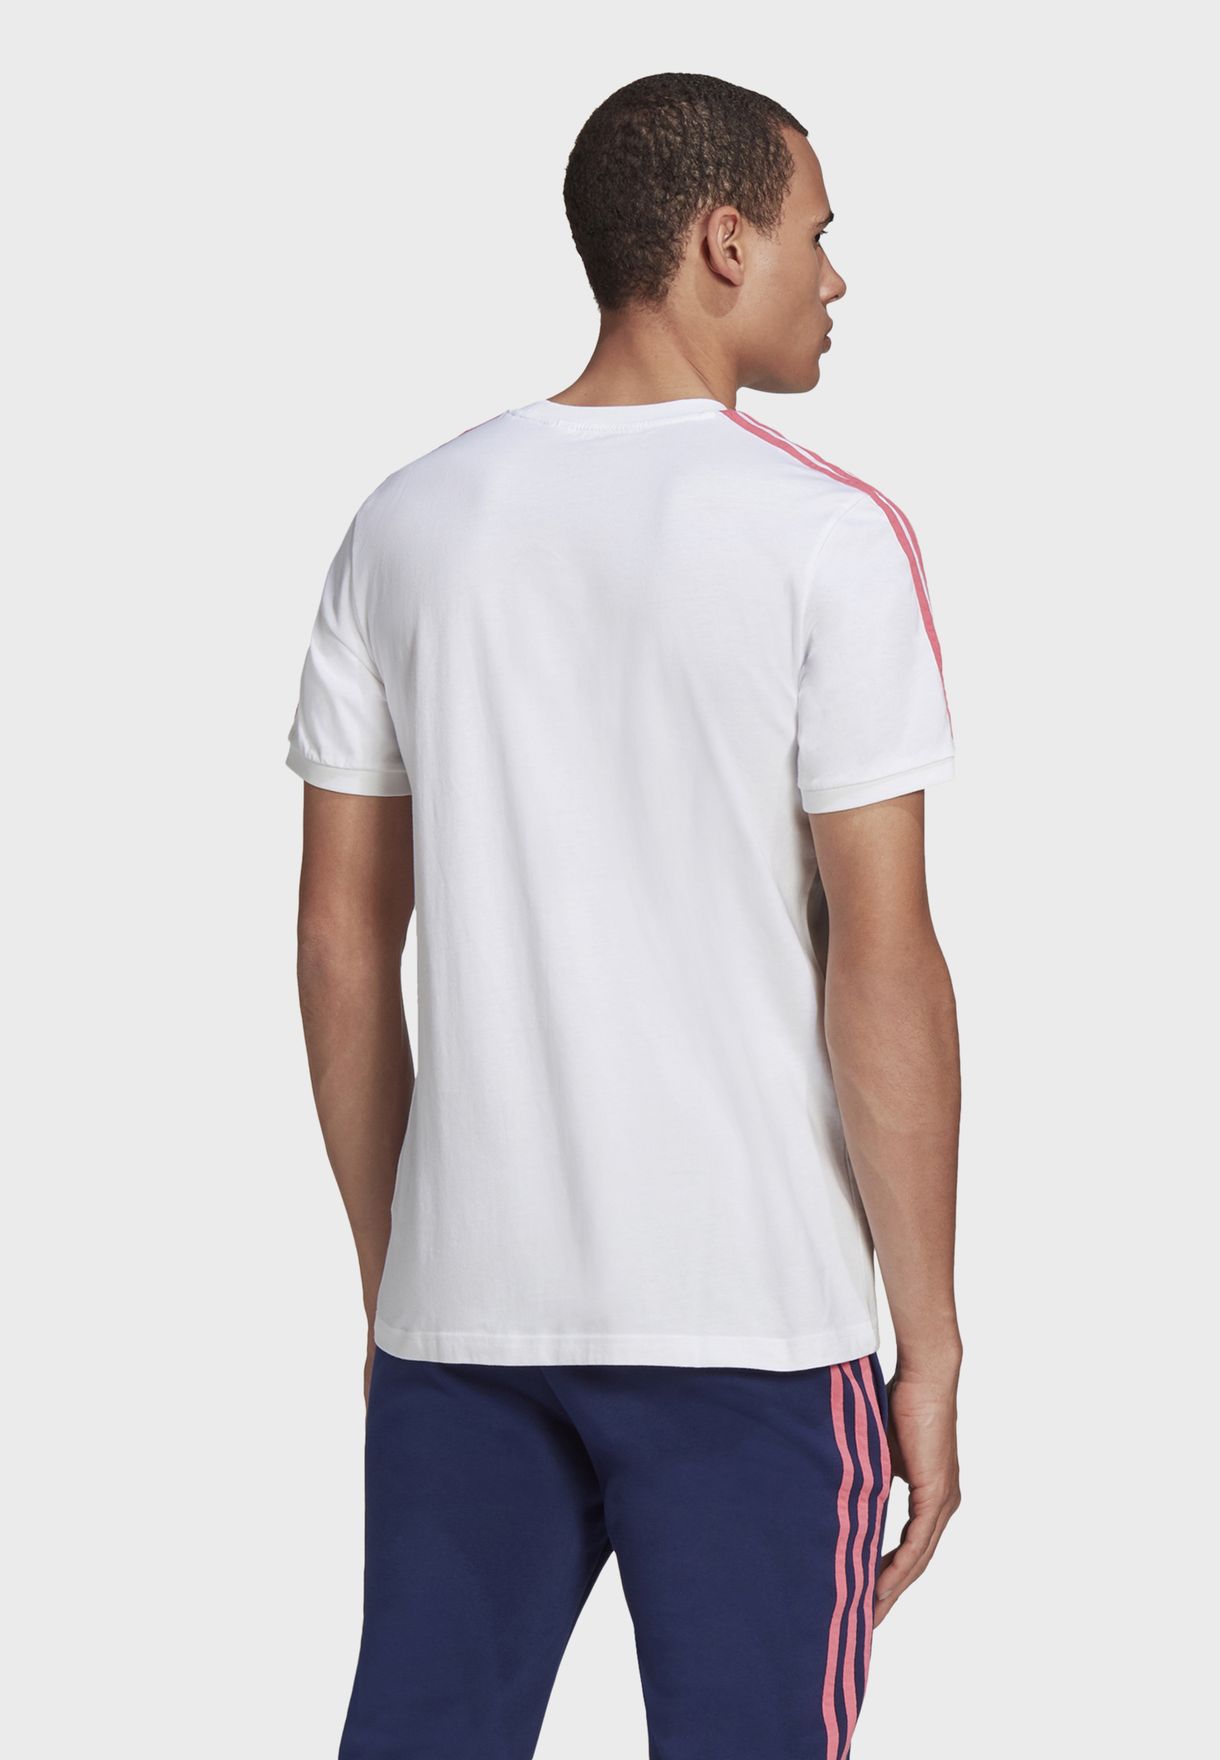 Real Madrid Football Soccer Men's T-Shirt